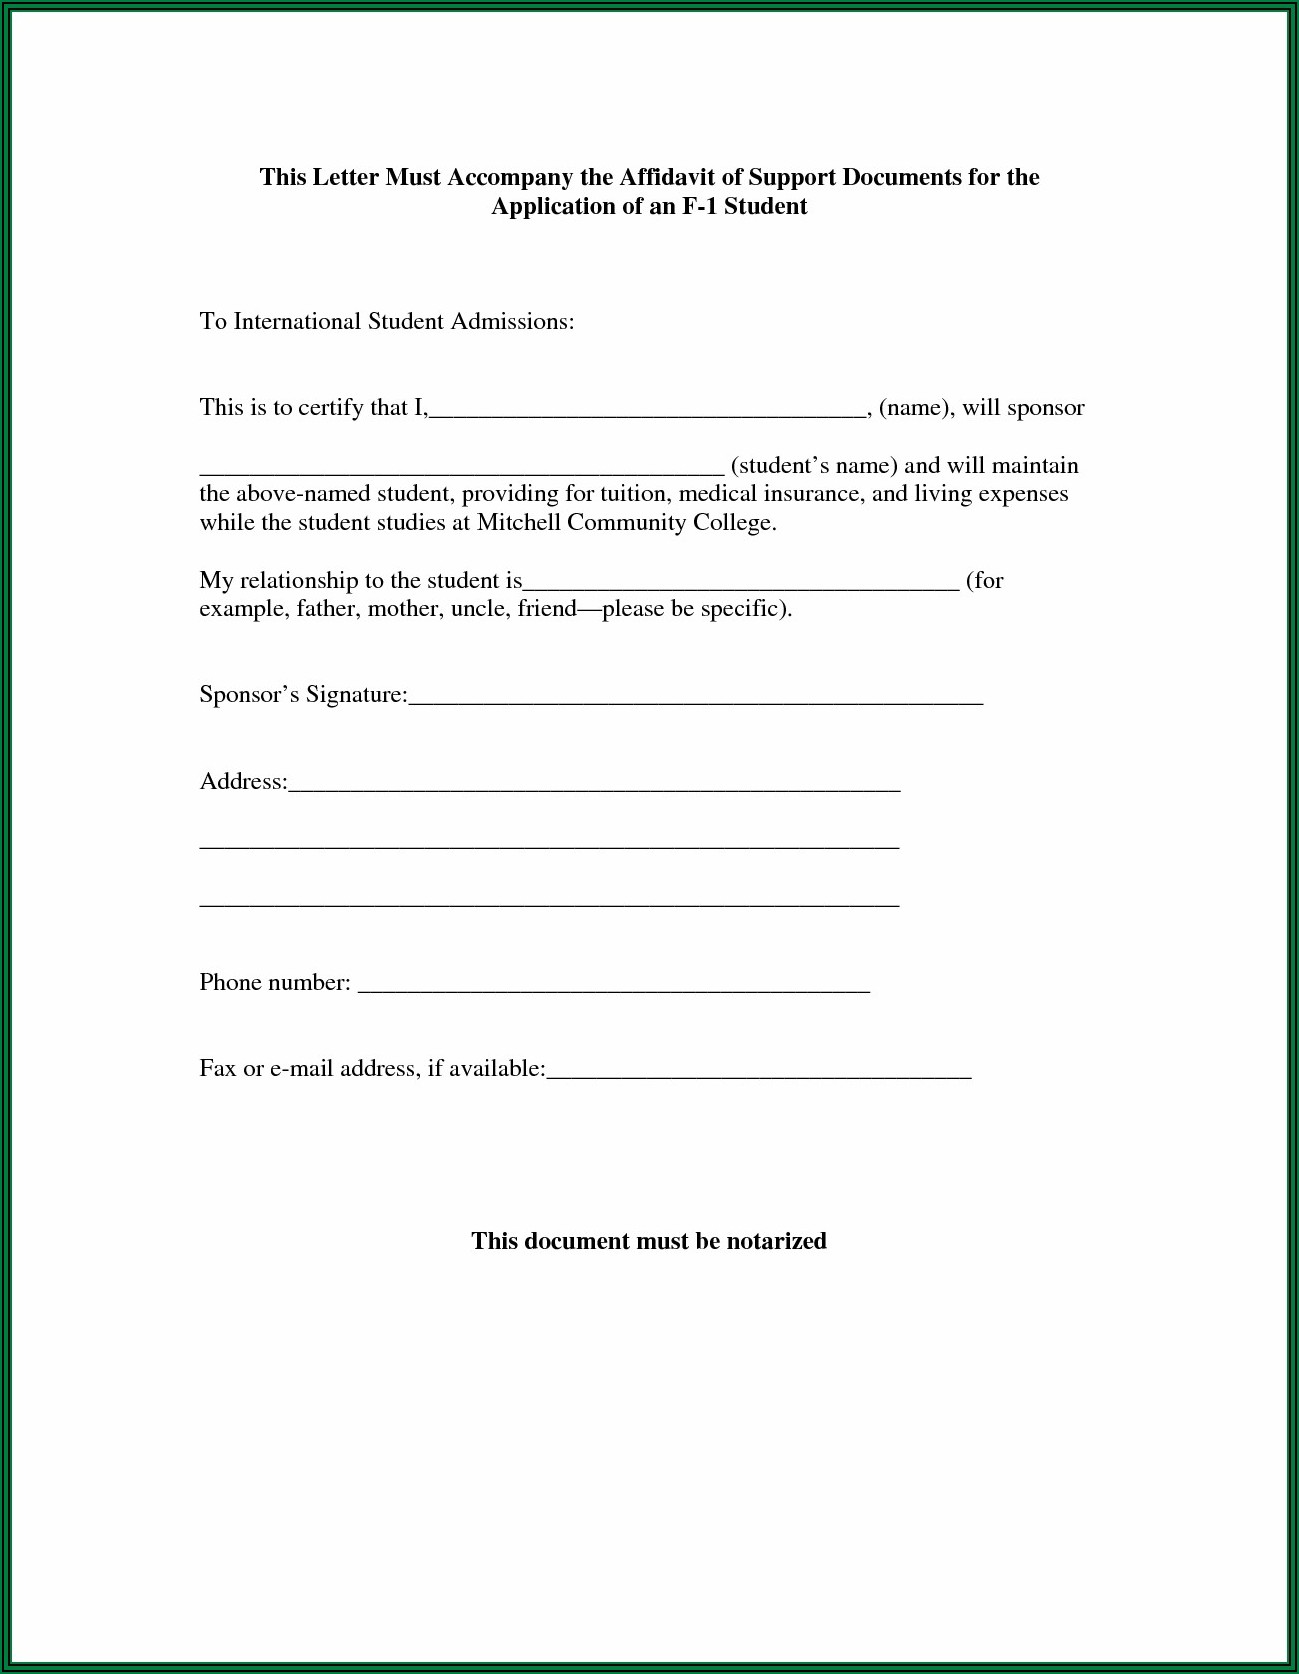 Canadian Immigration Citizenship Application Form